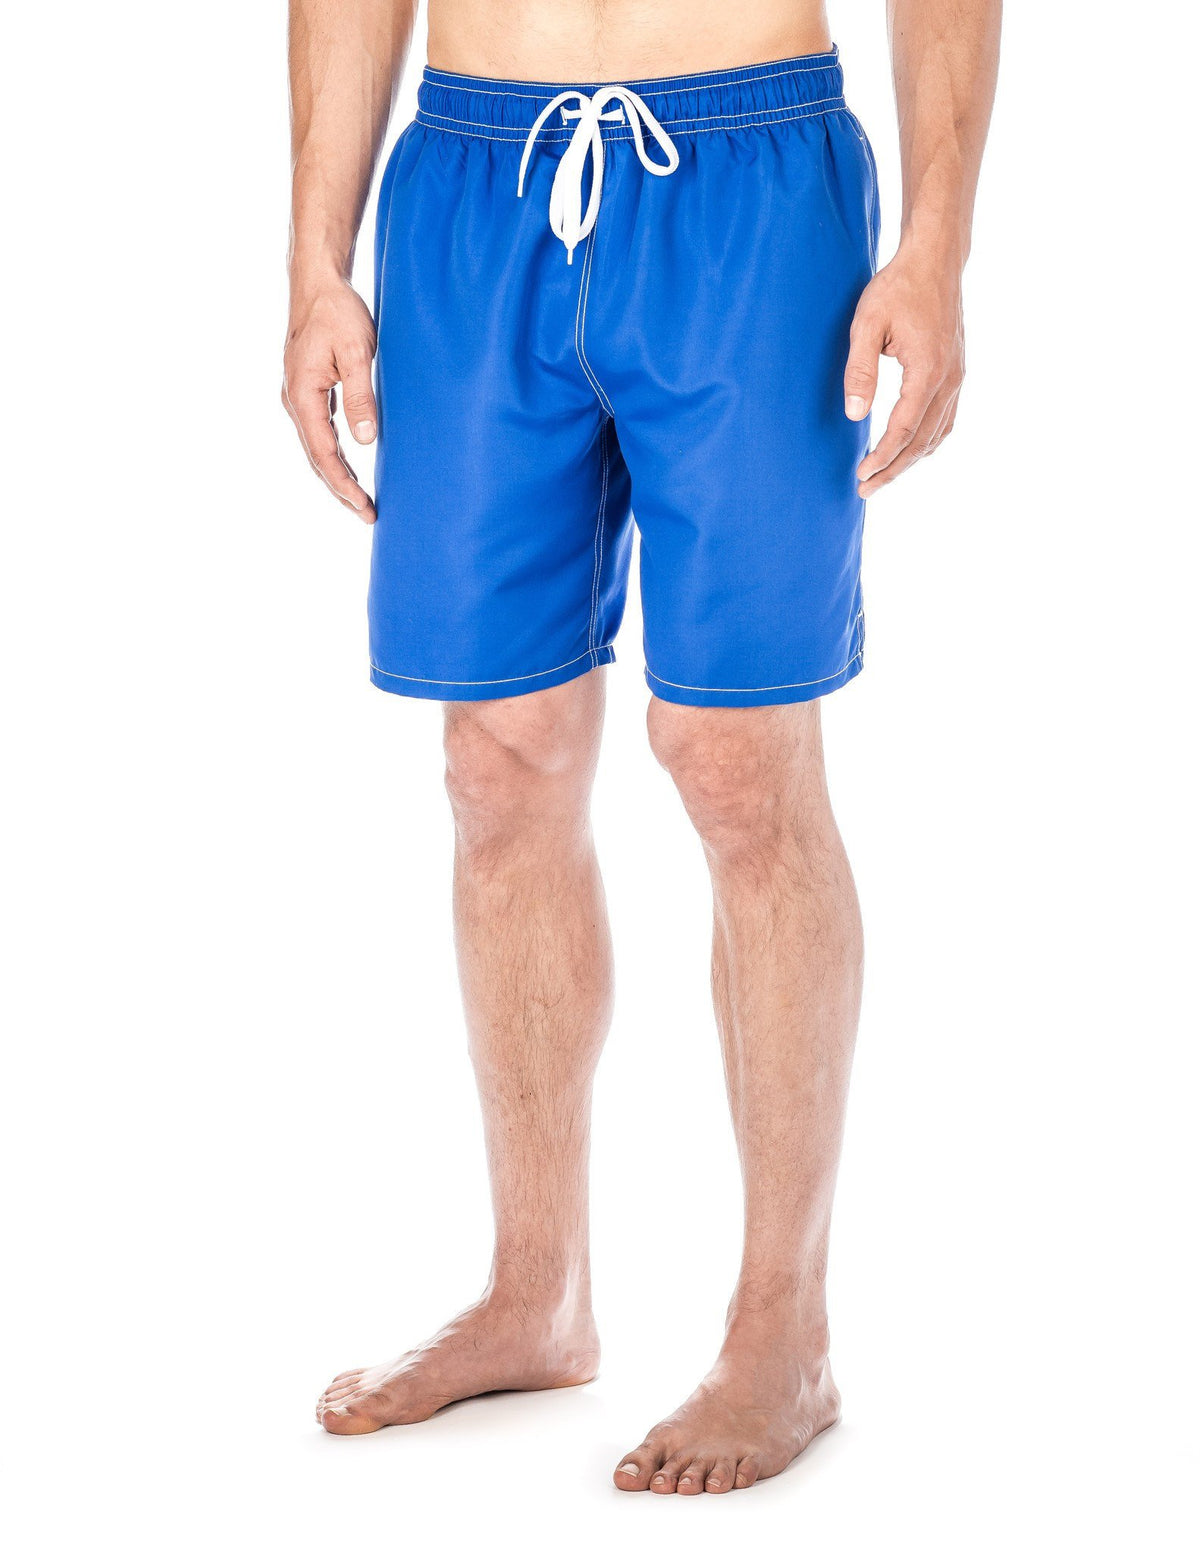 Men's Premium Swim Trunks - Blue/White